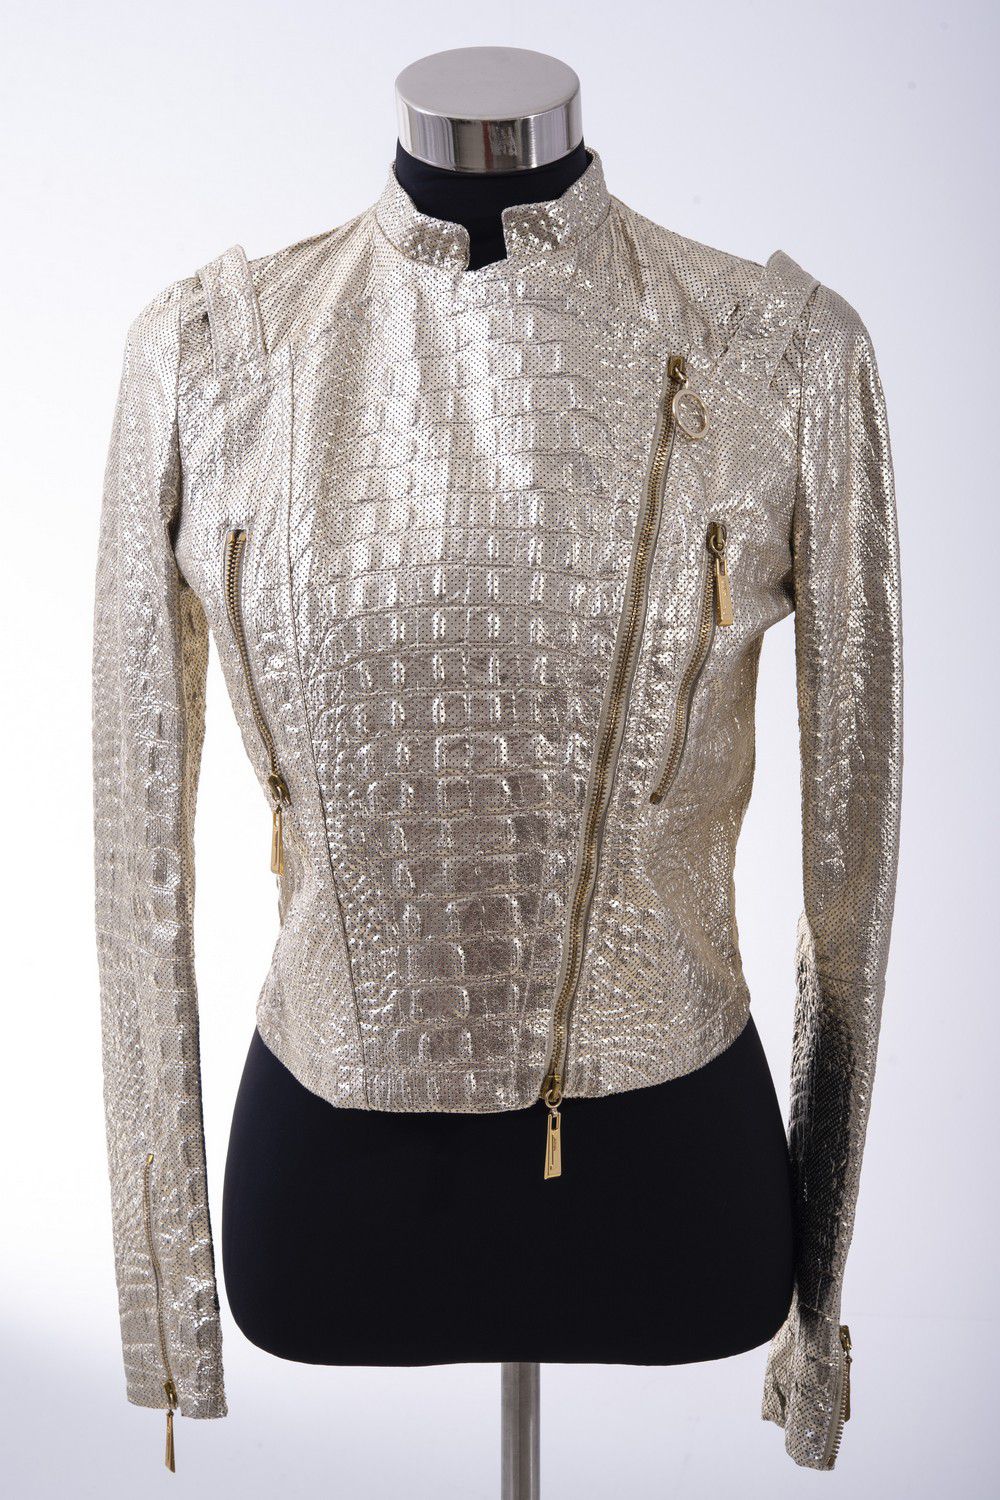 Gold Metallic Leather Jacket by Roberto Cavalli - Clothing - Women's